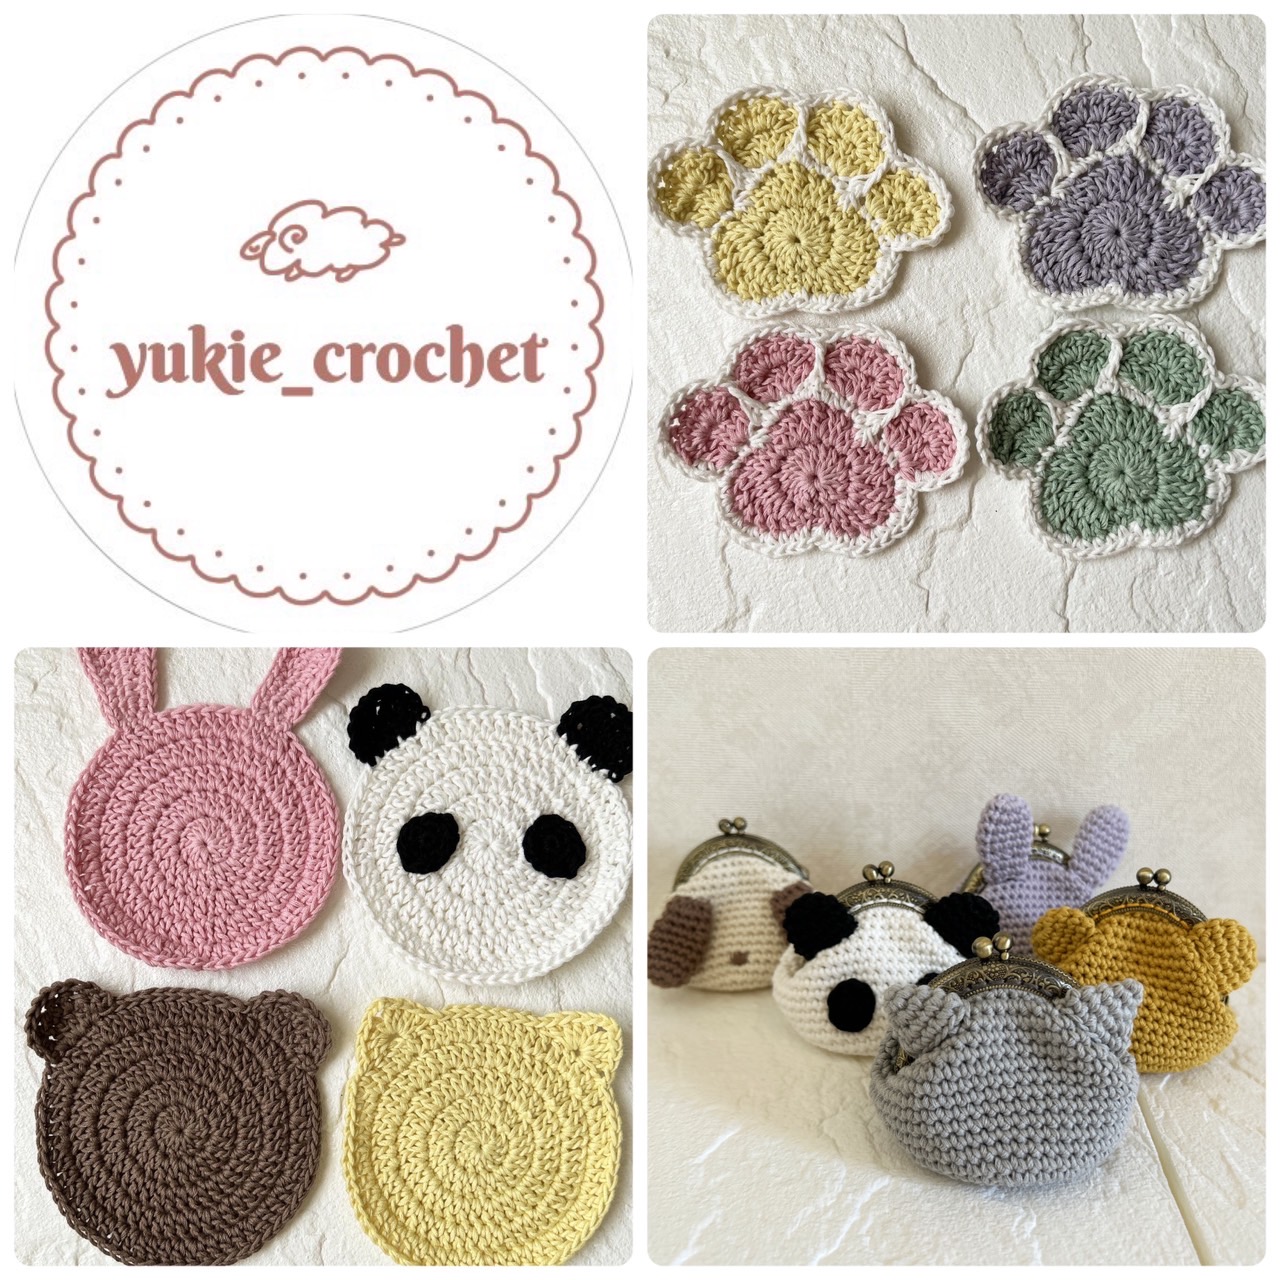 yukie_crochet